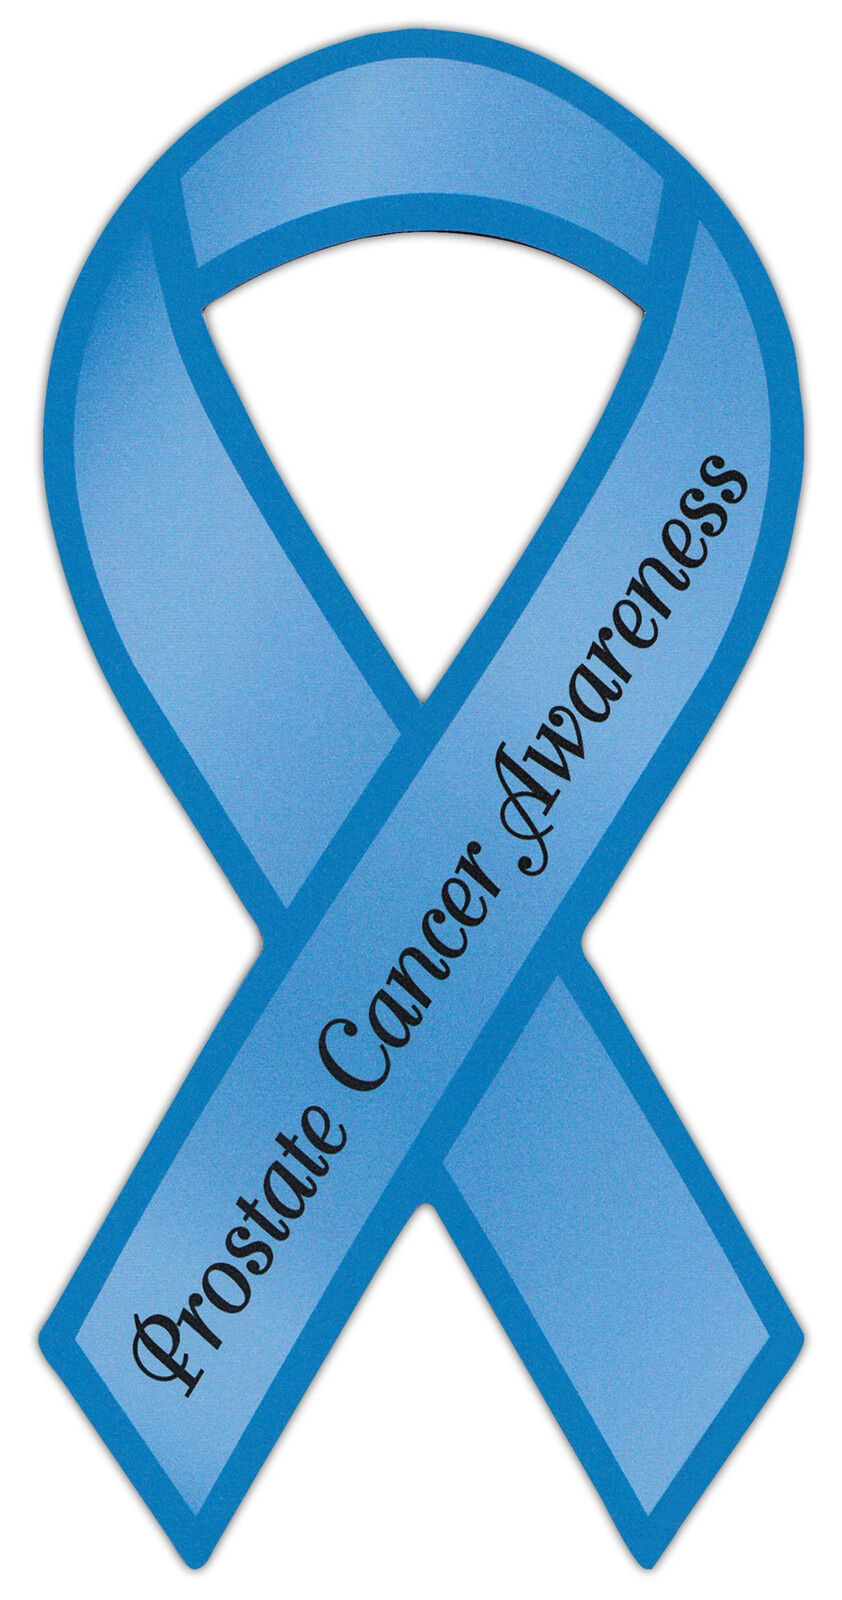 Ribbon Awareness Support Magnet - Prostate Cancer - Cars, Trucks, Refrigerator